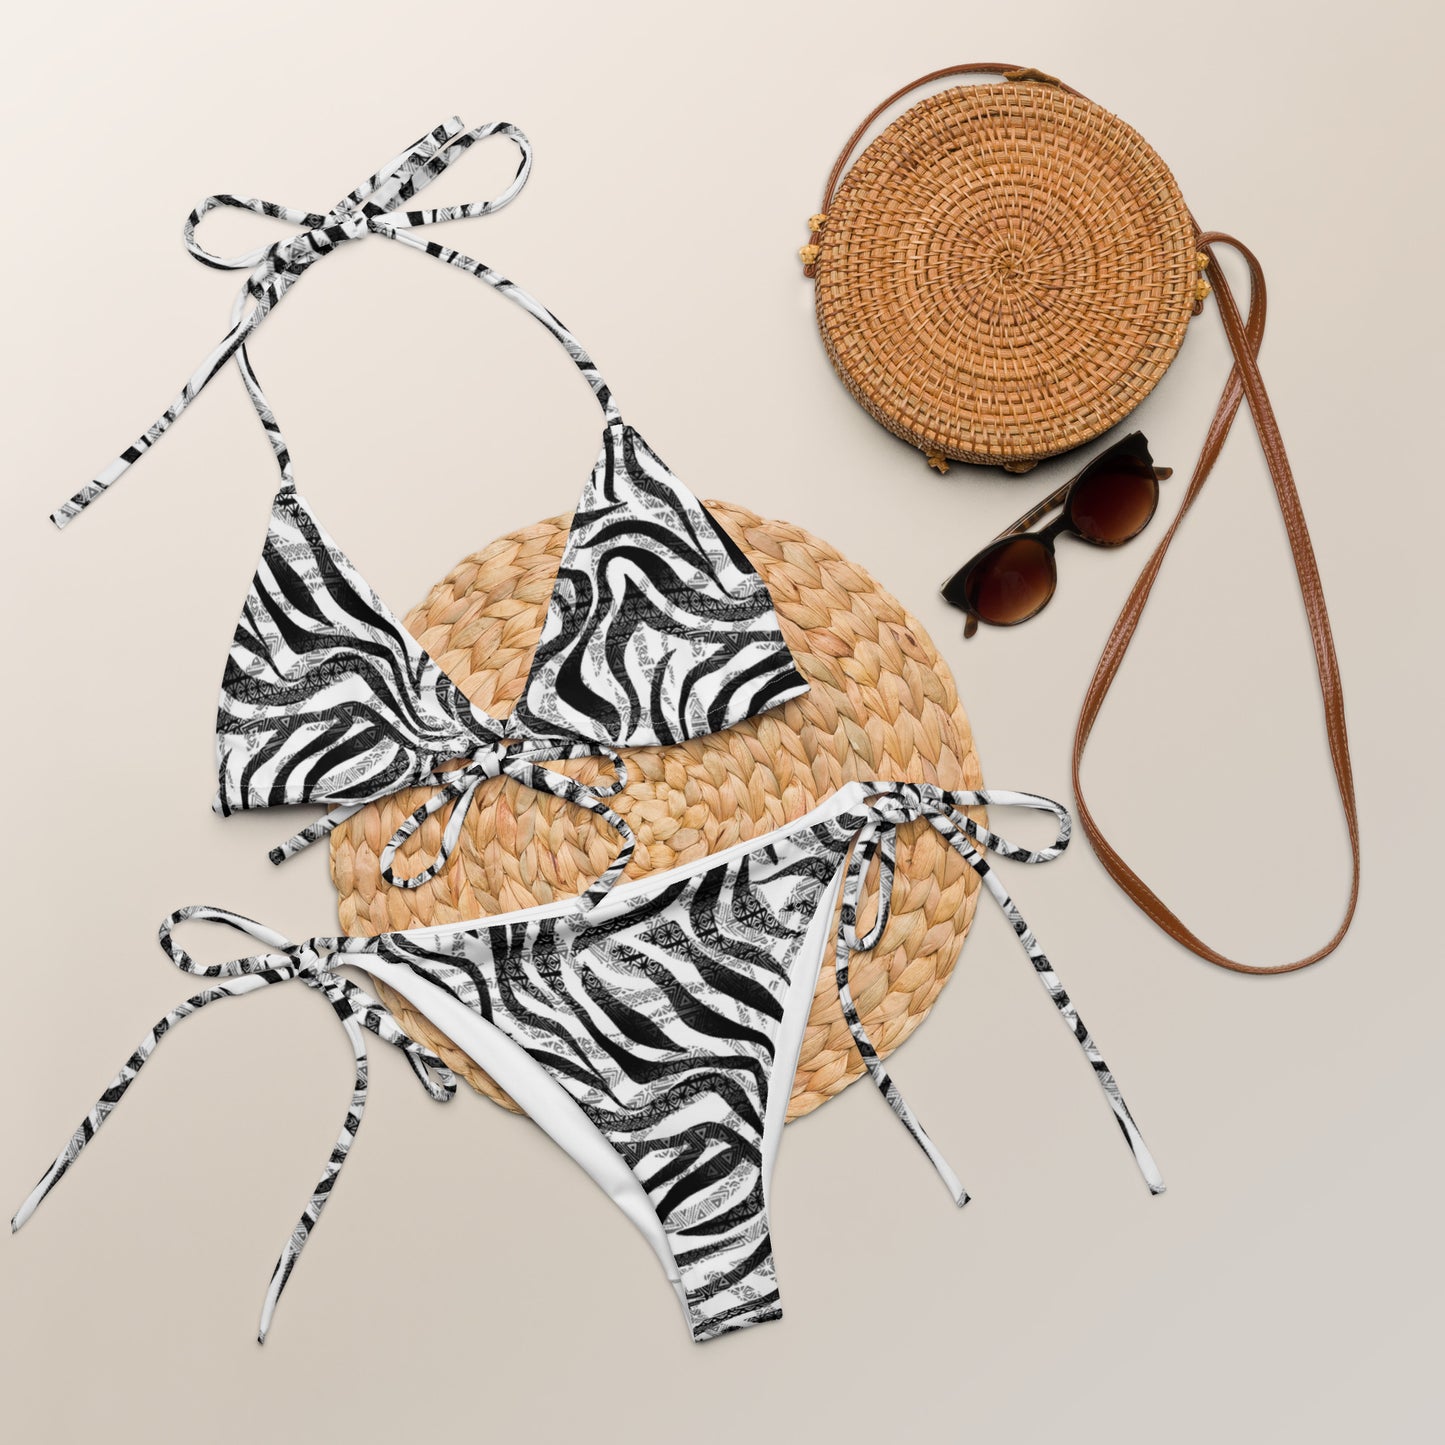 String Bikini (Glamourange Women Swimwear By Patterns - 0011 Model)